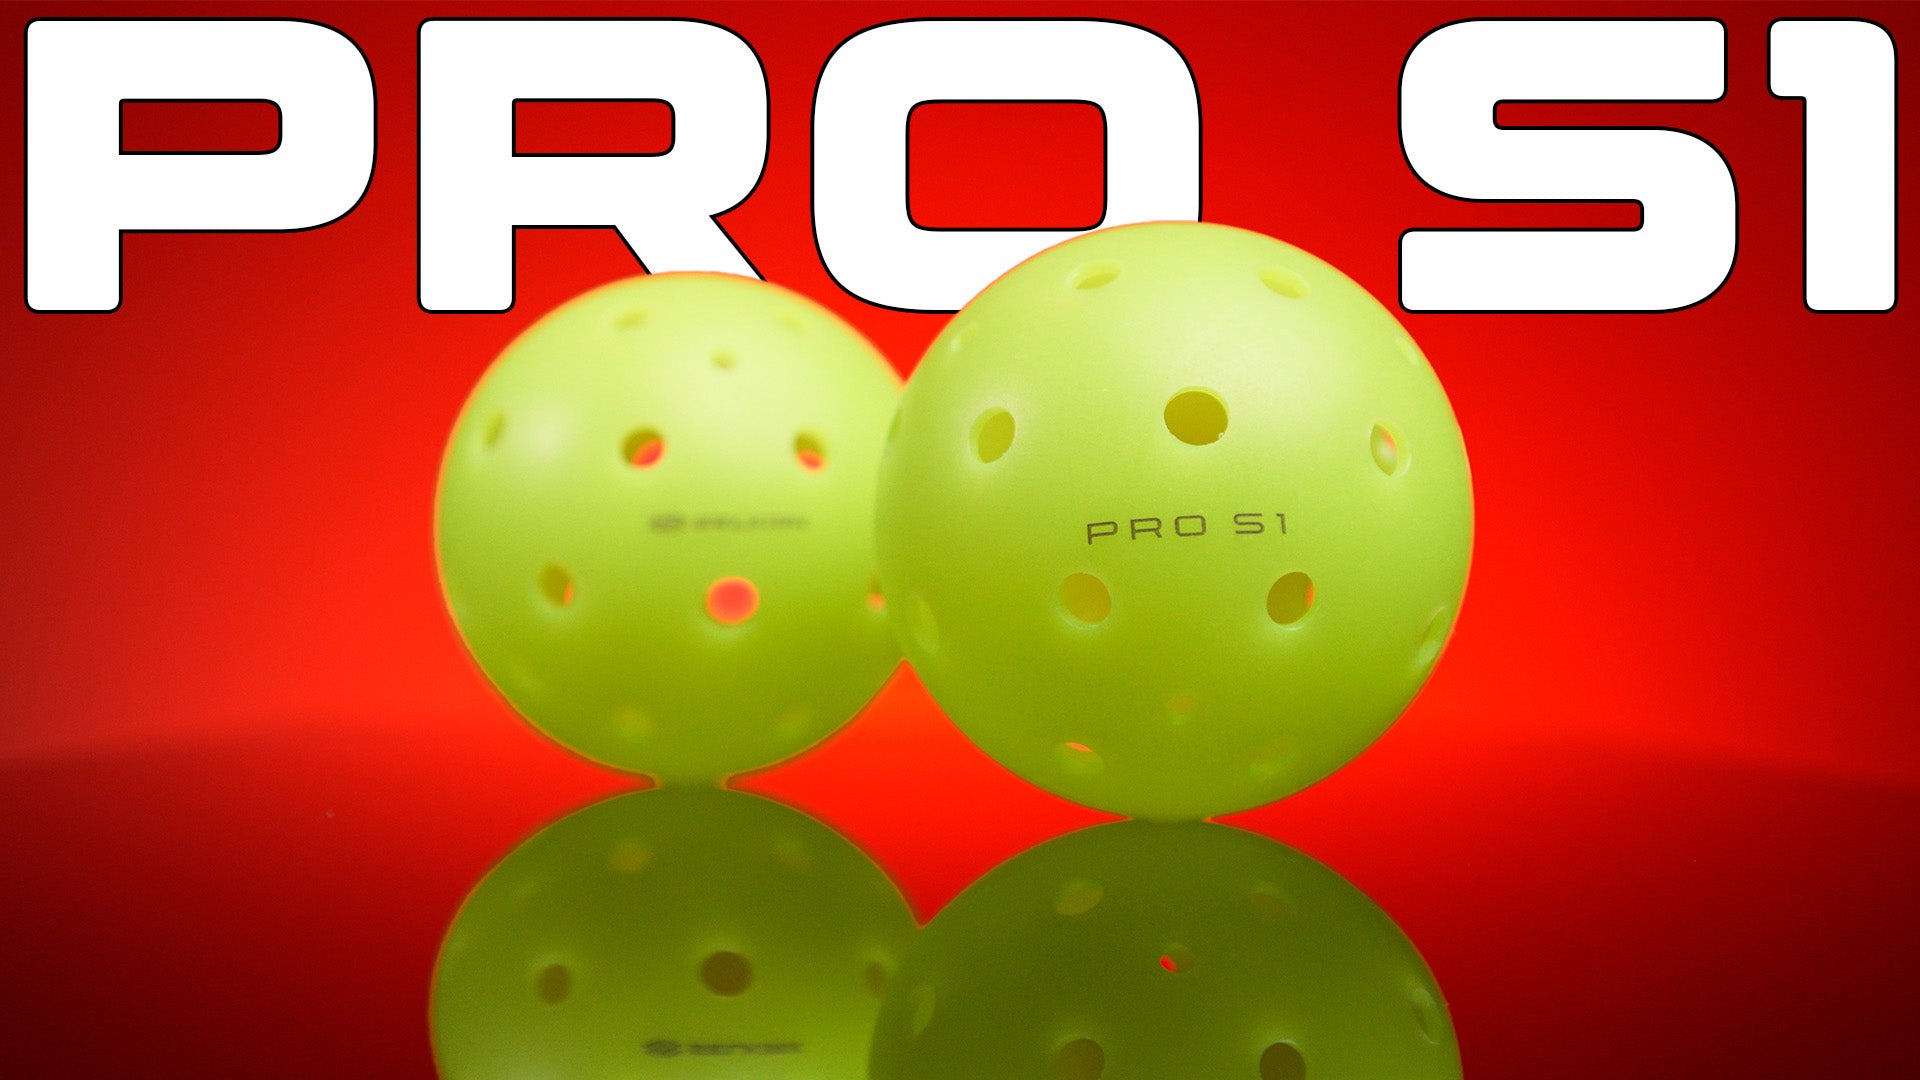 Selkirk Sport's NEW Pro S1 Pickleball Ball - A New Standard thumbnail